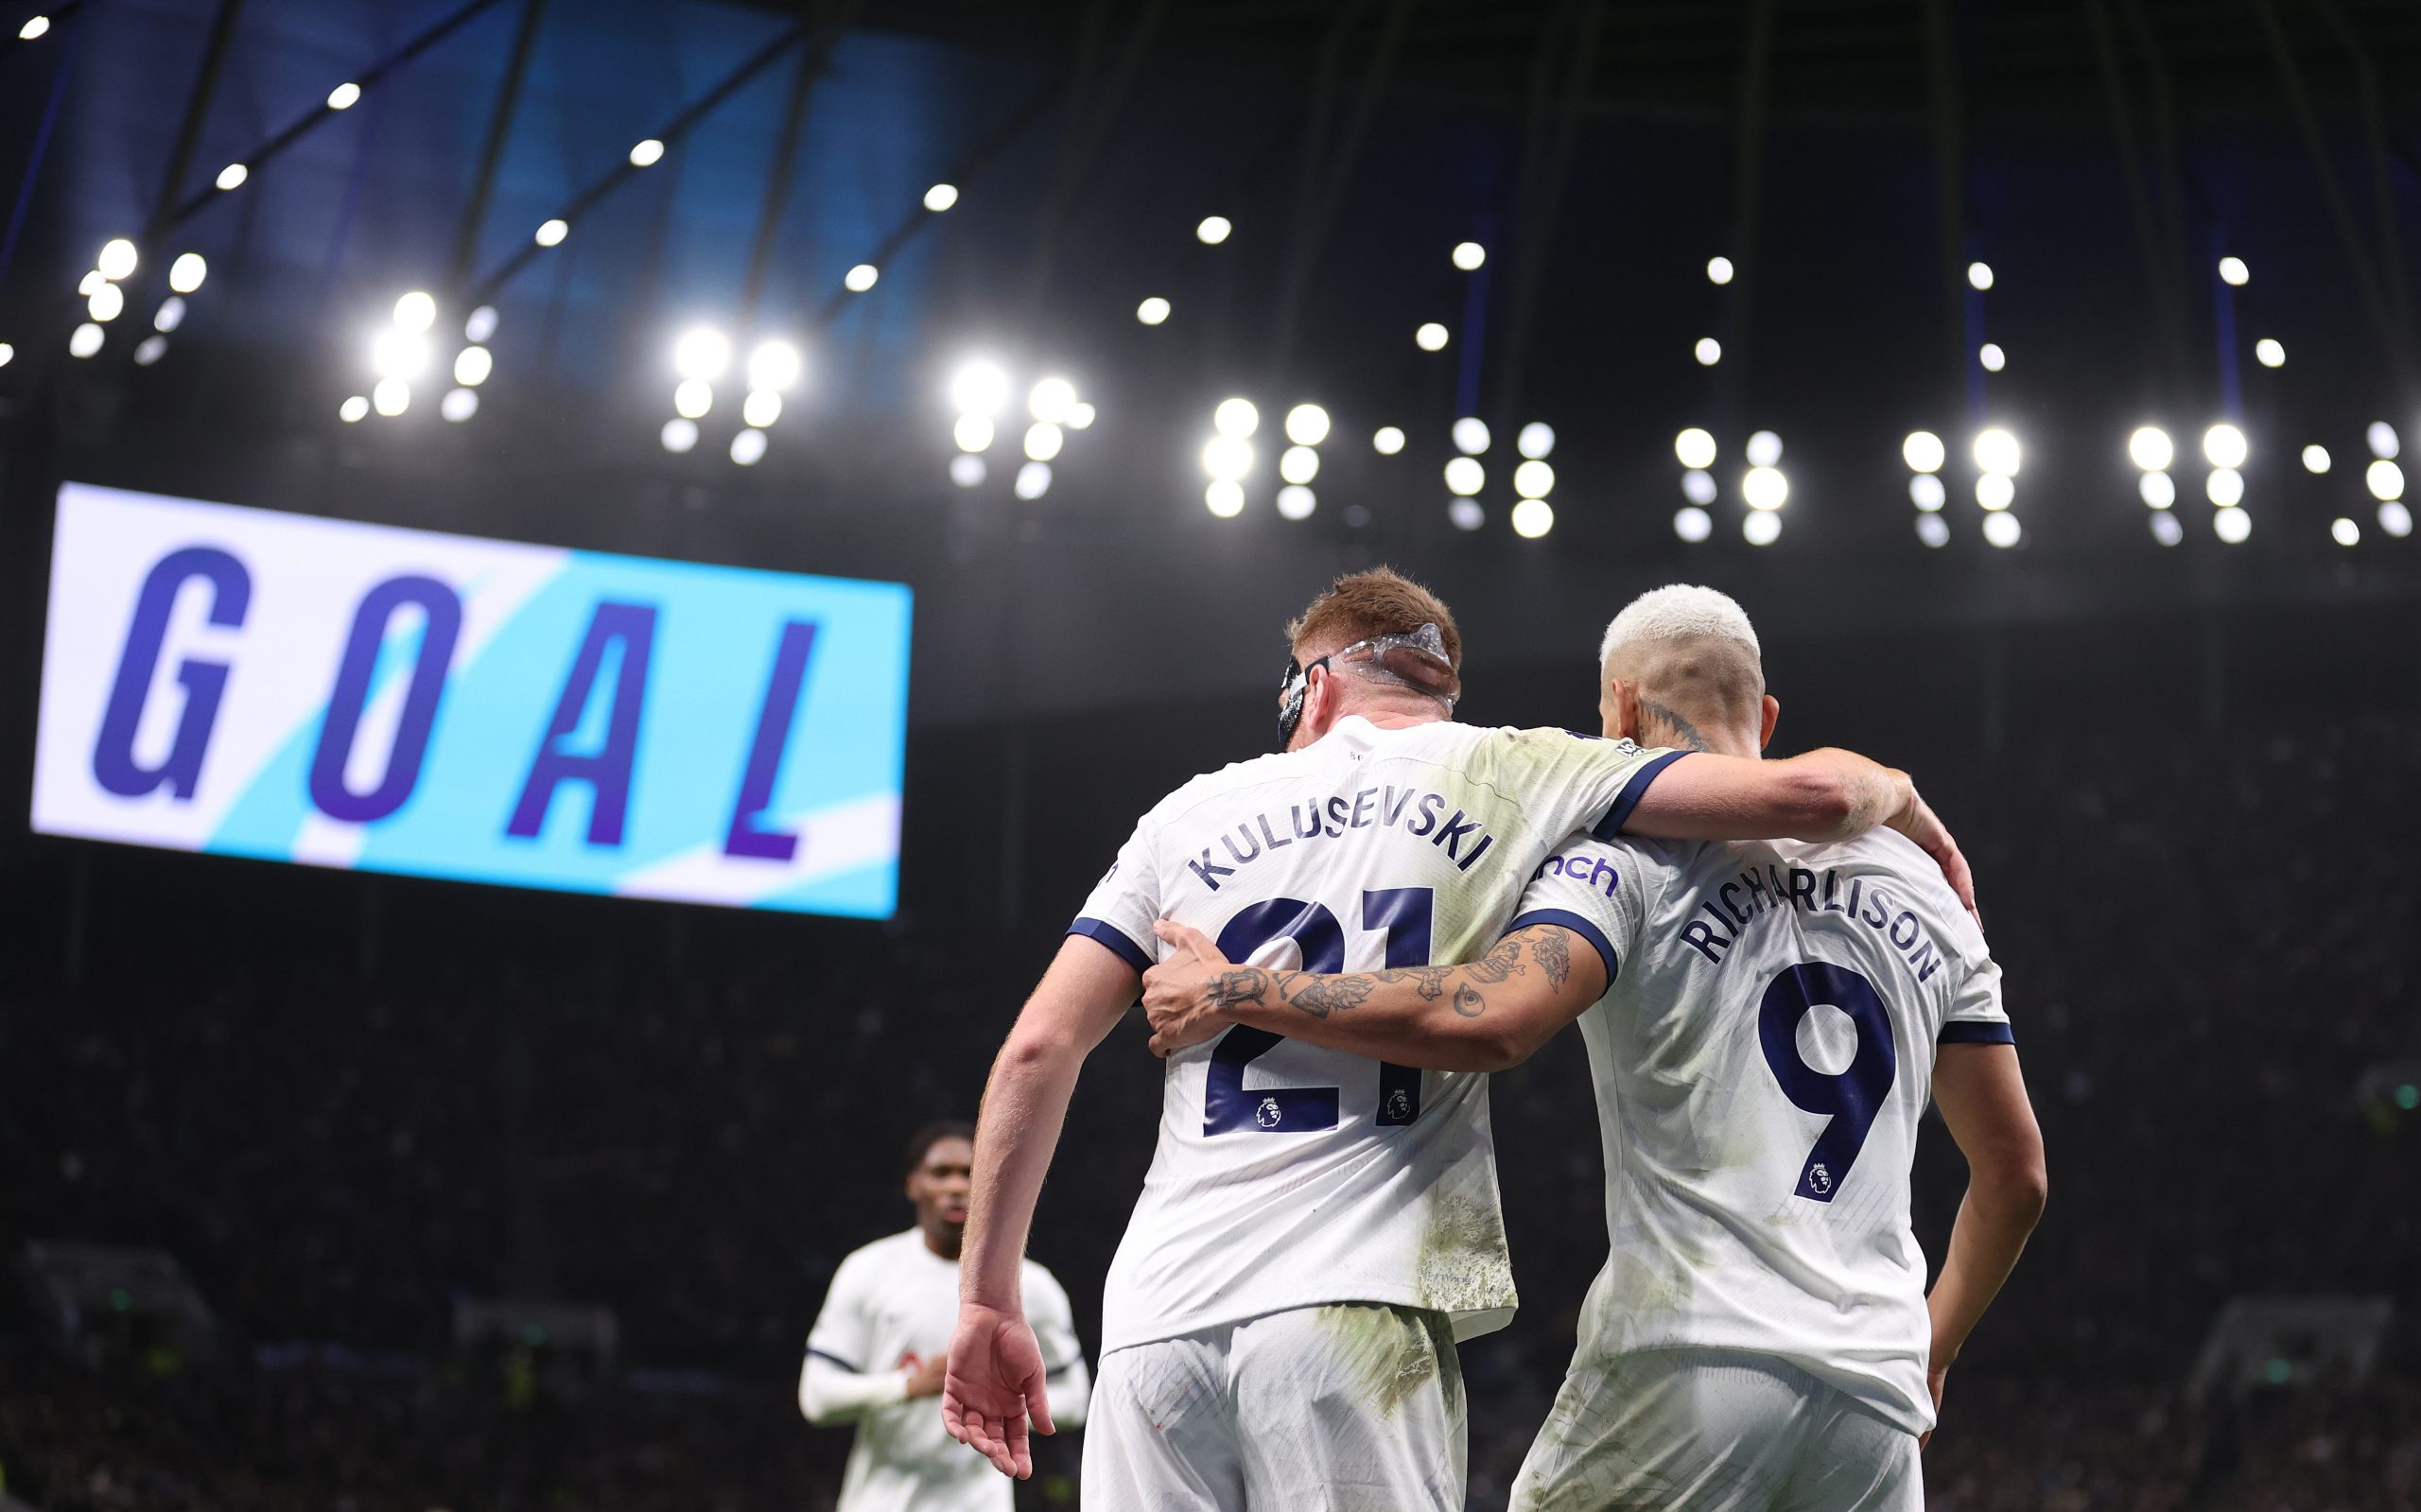 Tottenham Hotspur can gun for arch-rivals Arsenal FC's 55-game scoring streak.